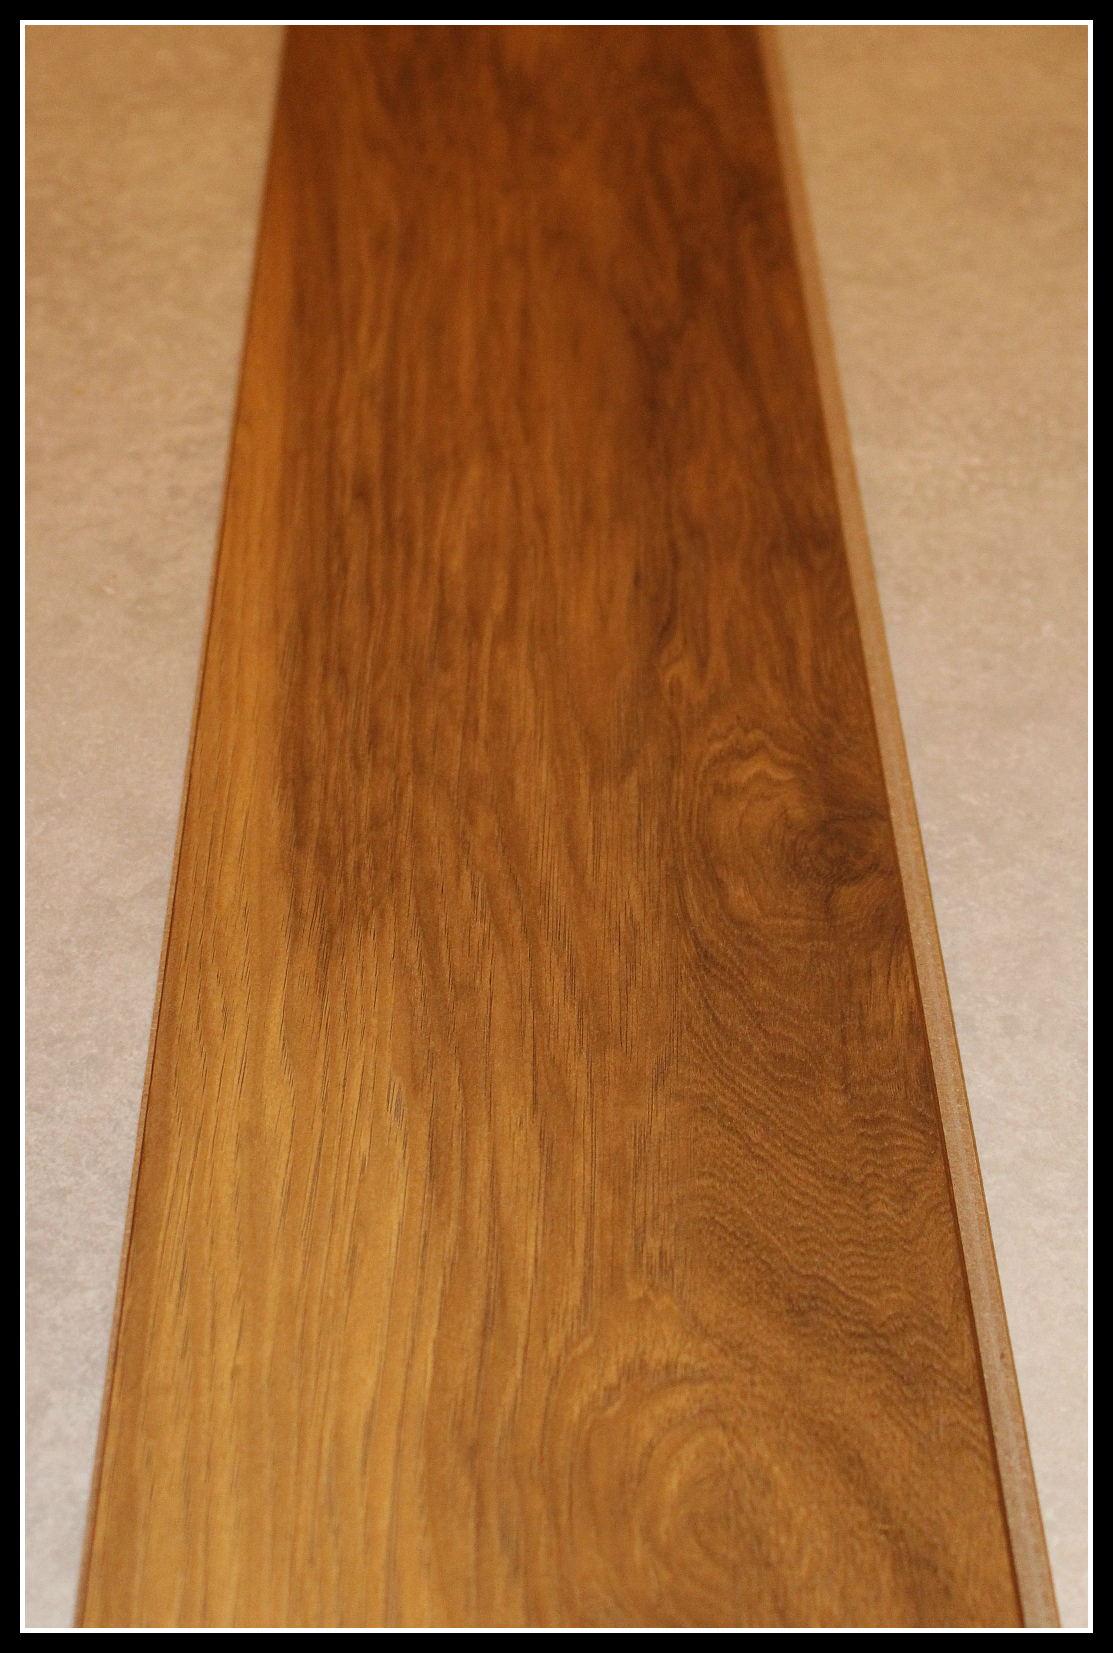 Madera light hickory wood laminate flooring, wood laminate, flooring, wood laminate flooring, kitchen, DIY, property, home improvement, flooring